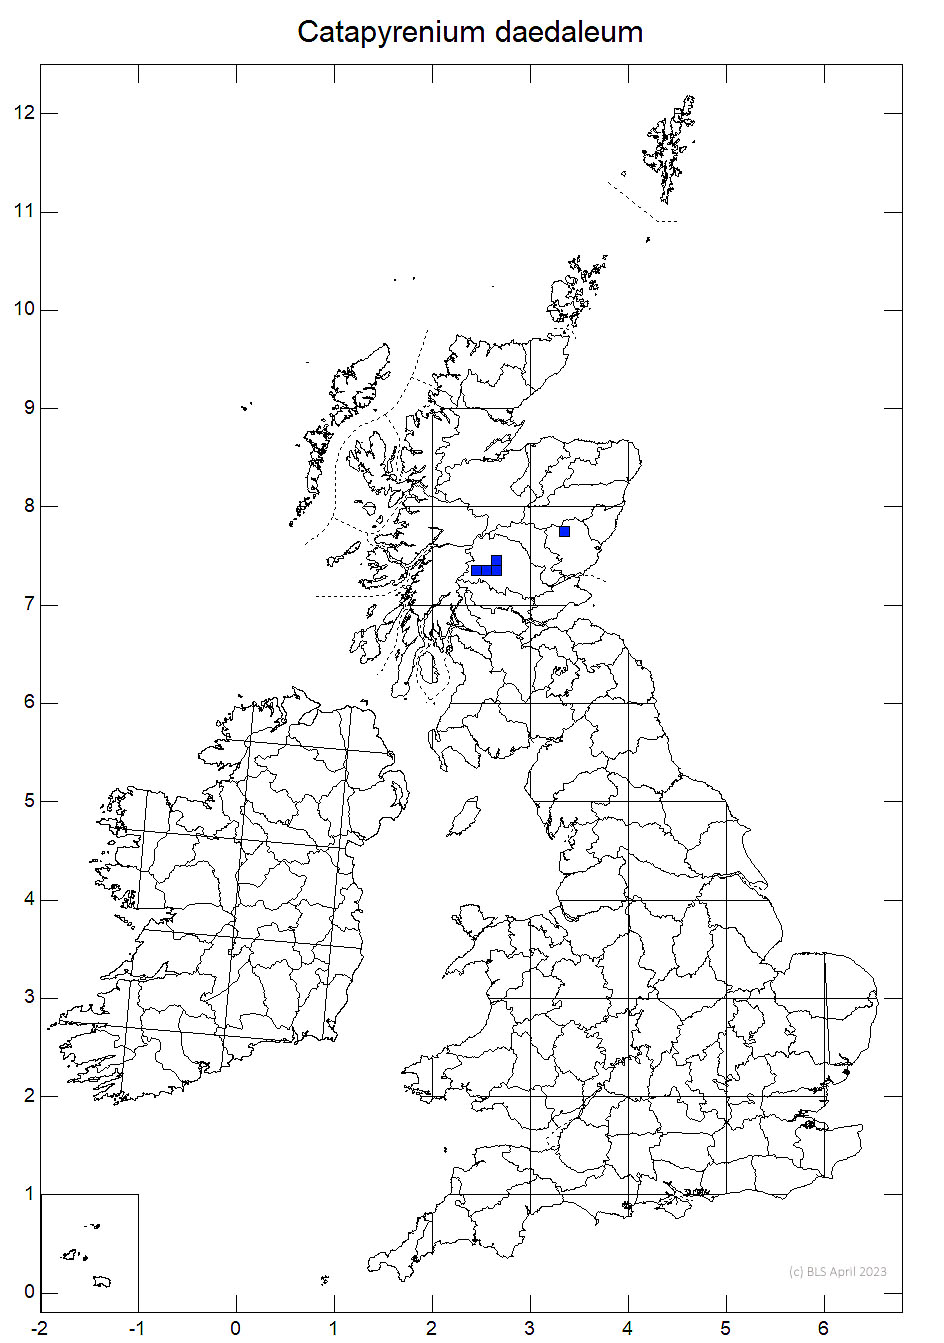 Catapyrenium daedaleum 10km sq distribution map